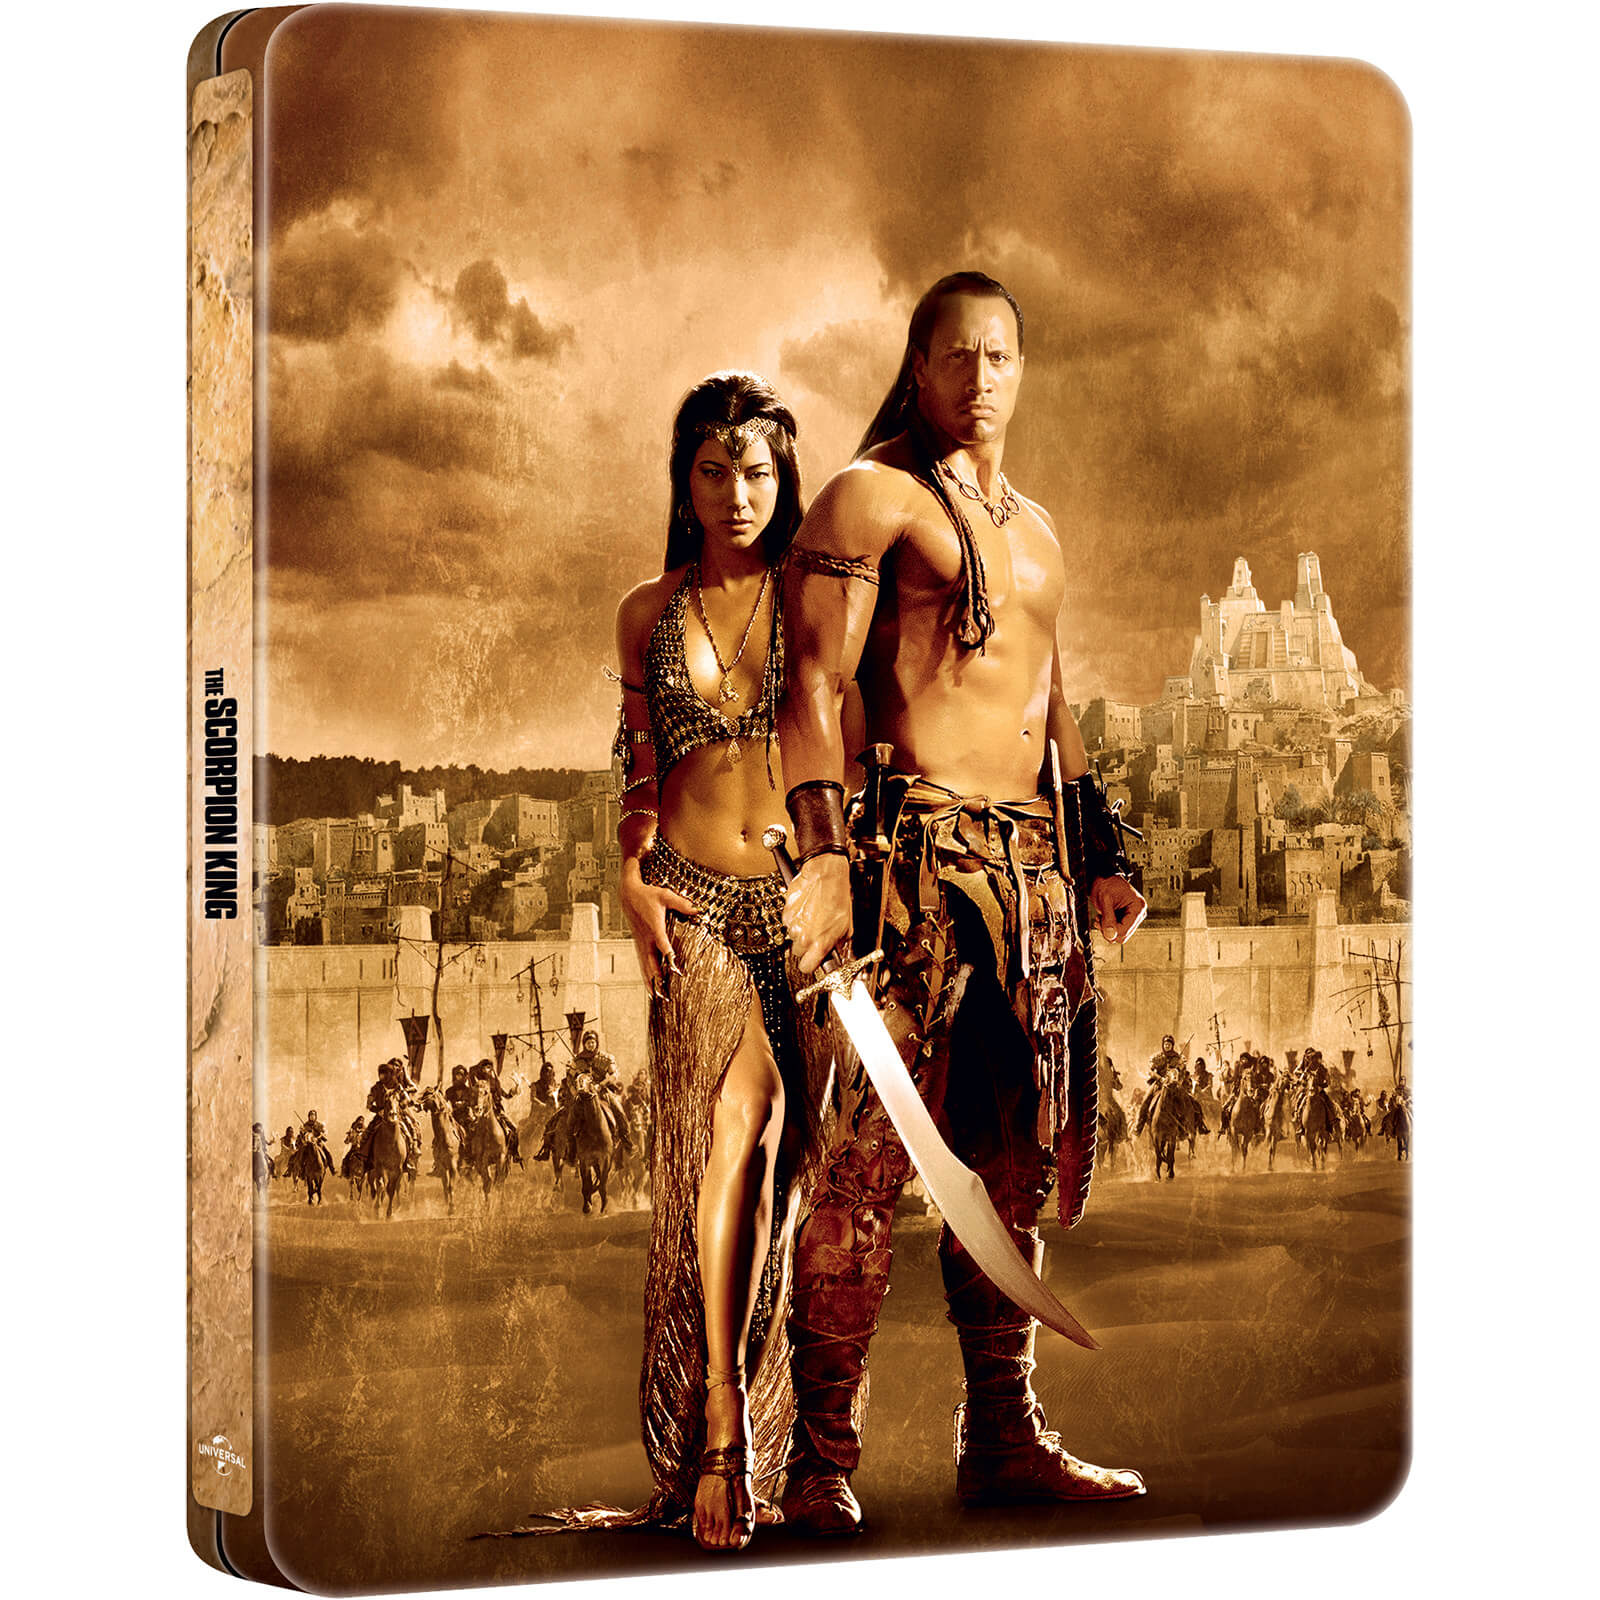 The Scorpion King - Zavvi Exclusive 4K Ultra HD Steelbook (includes Blu-ray)